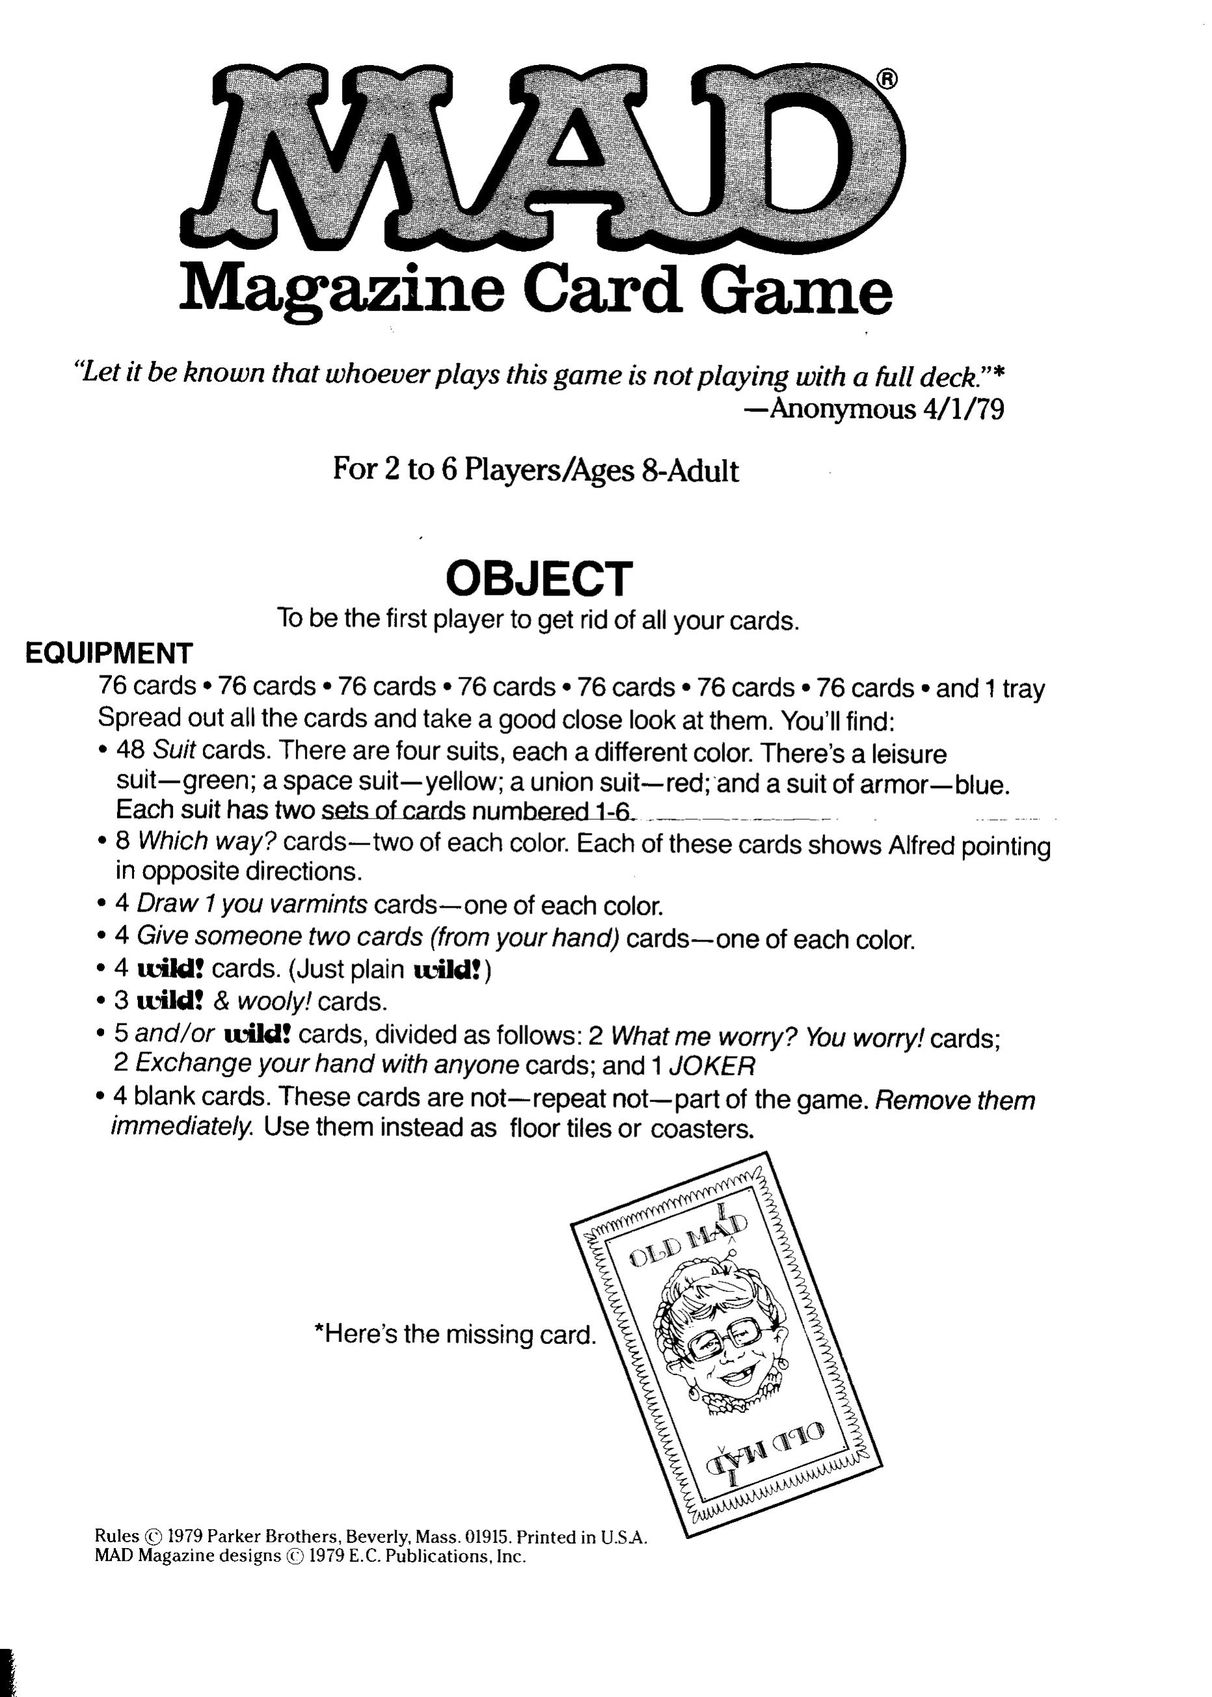 Mad Catz Magazine Card Game Games User Manual